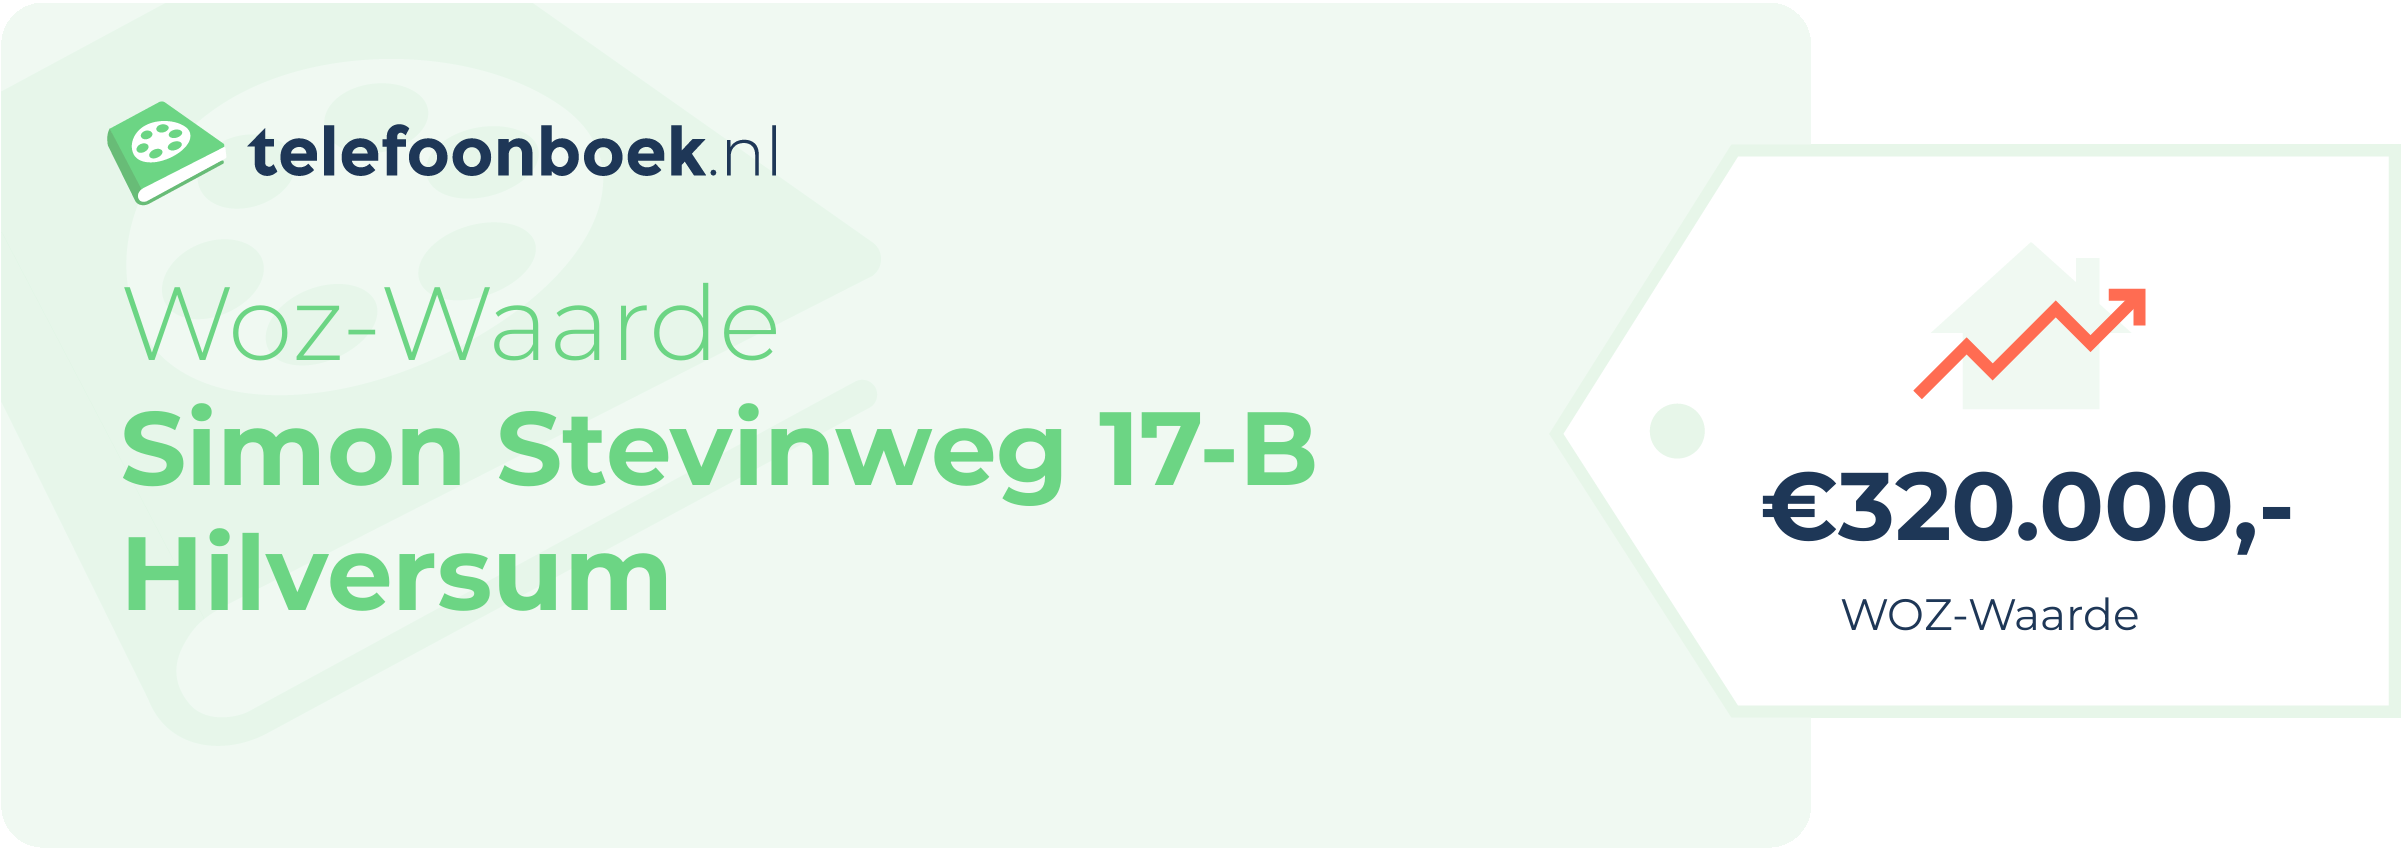 WOZ-waarde Simon Stevinweg 17-B Hilversum